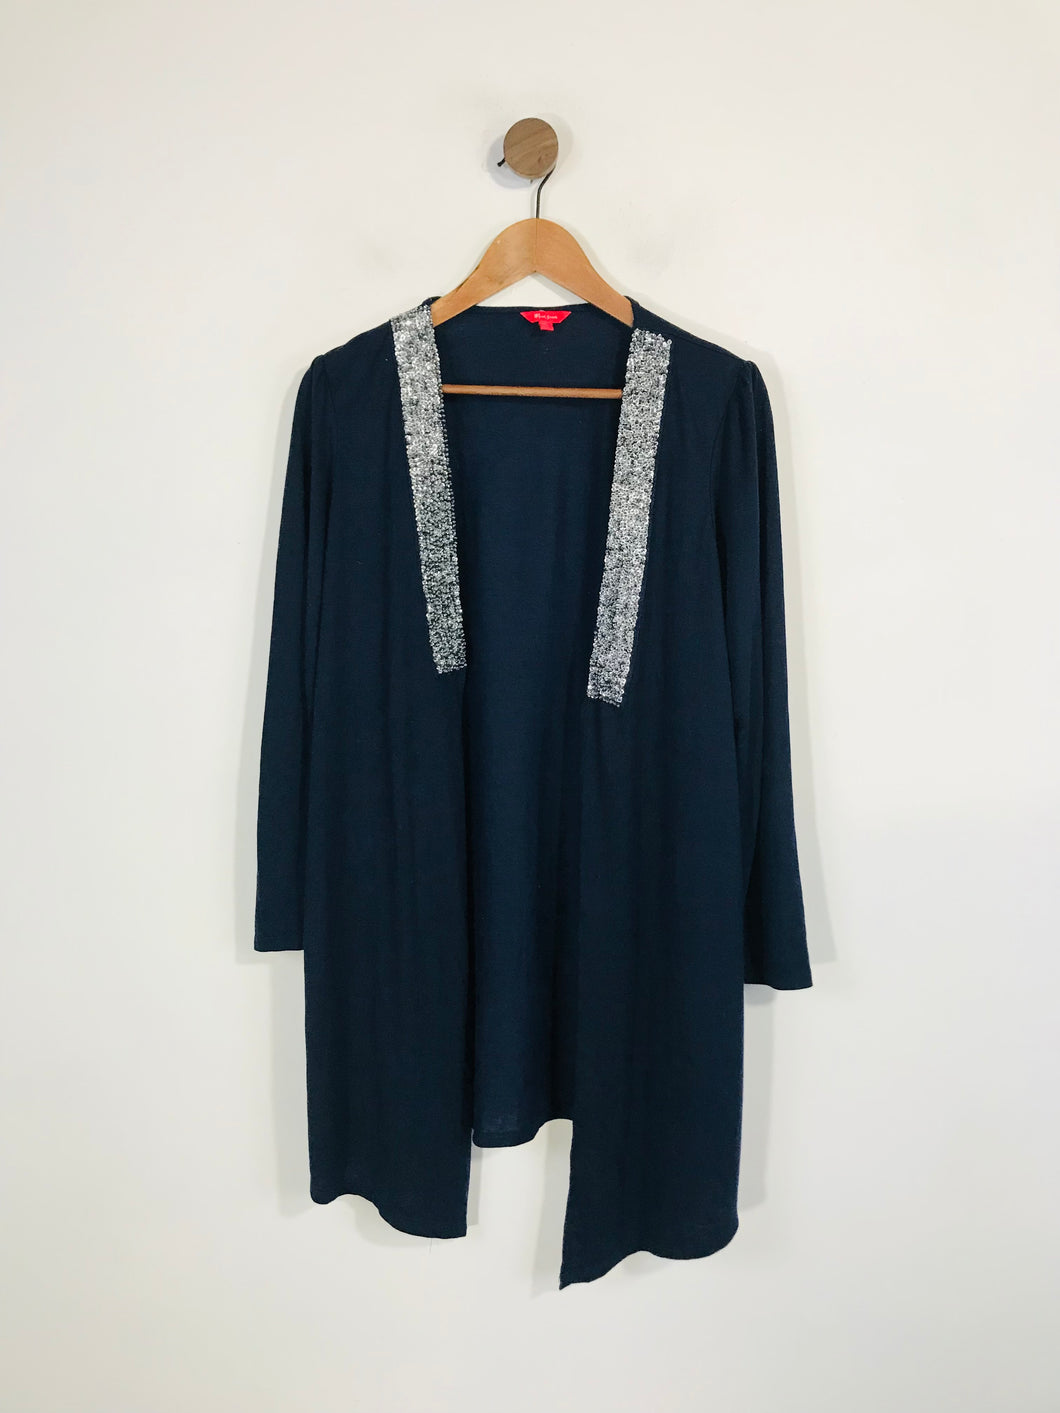 Monsoon Women's Embroidered Cardigan | XL UK16 | Blue